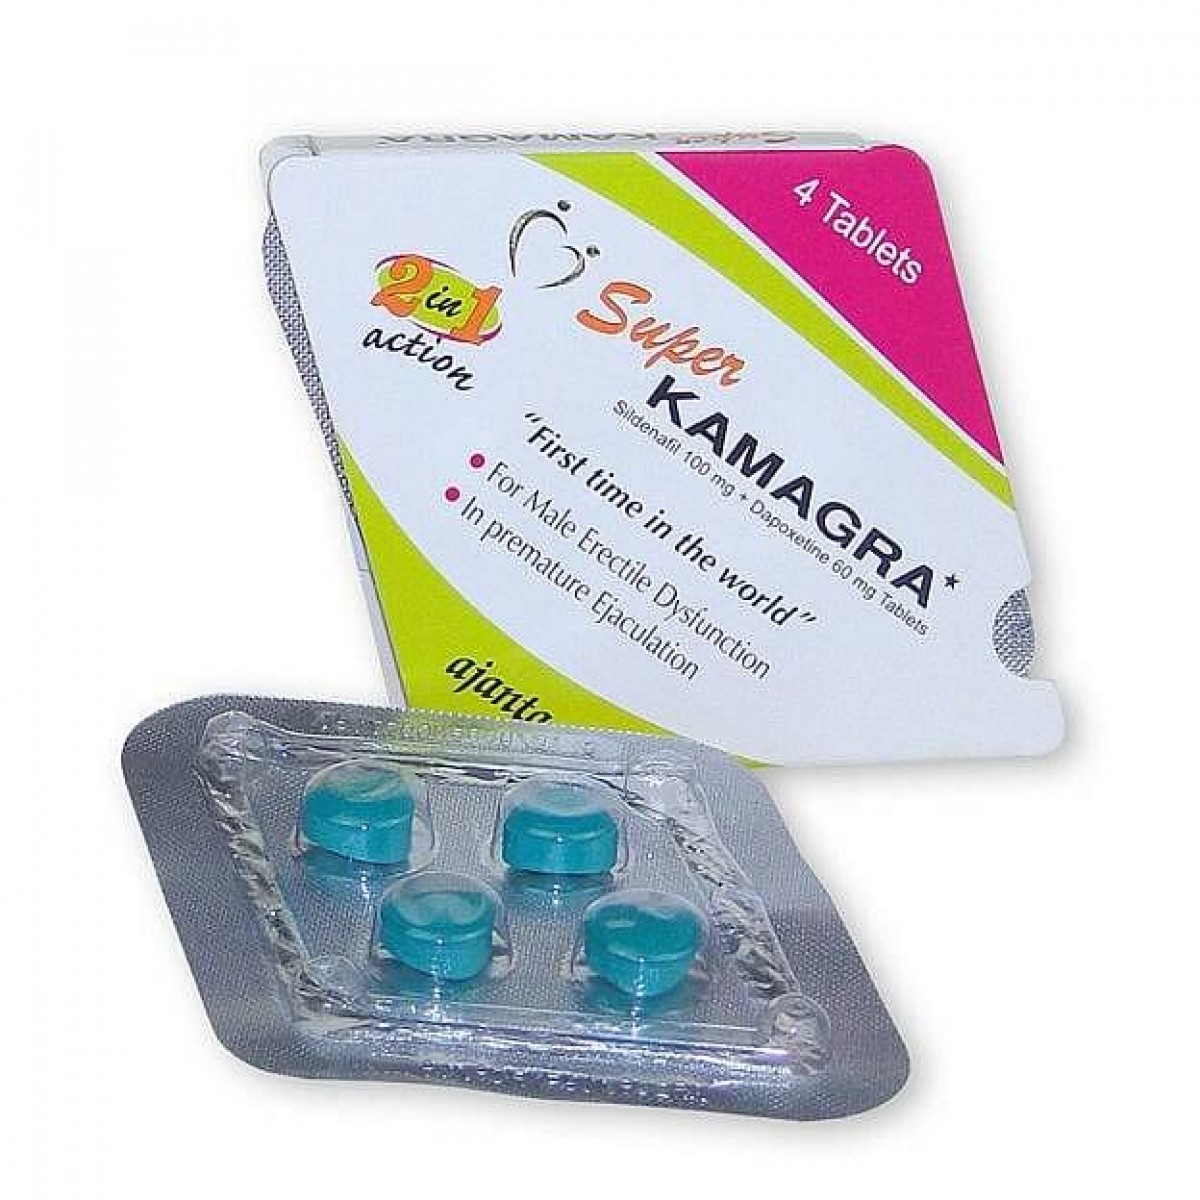 Kamagra Kopen Cobra 120 mg (Sildenafil) kopen met snelle levering